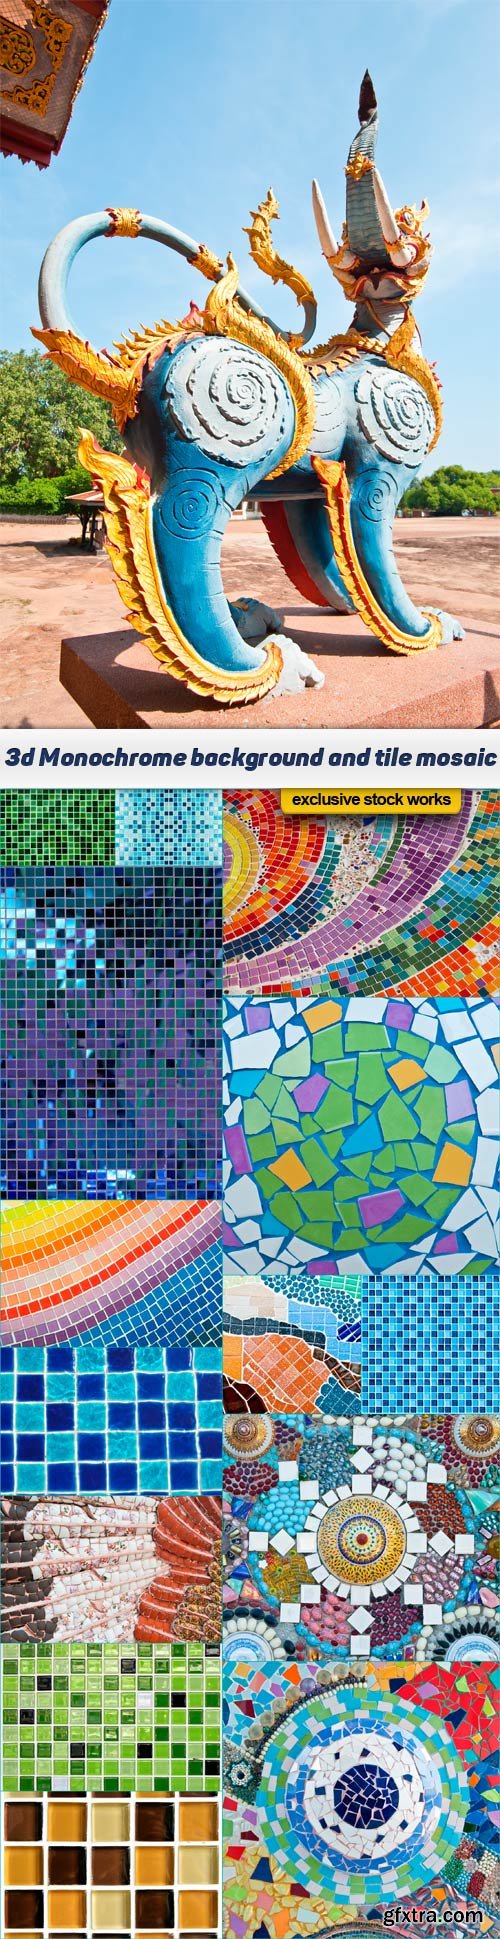 3d Monochrome background and tile mosaic 15x JPEG